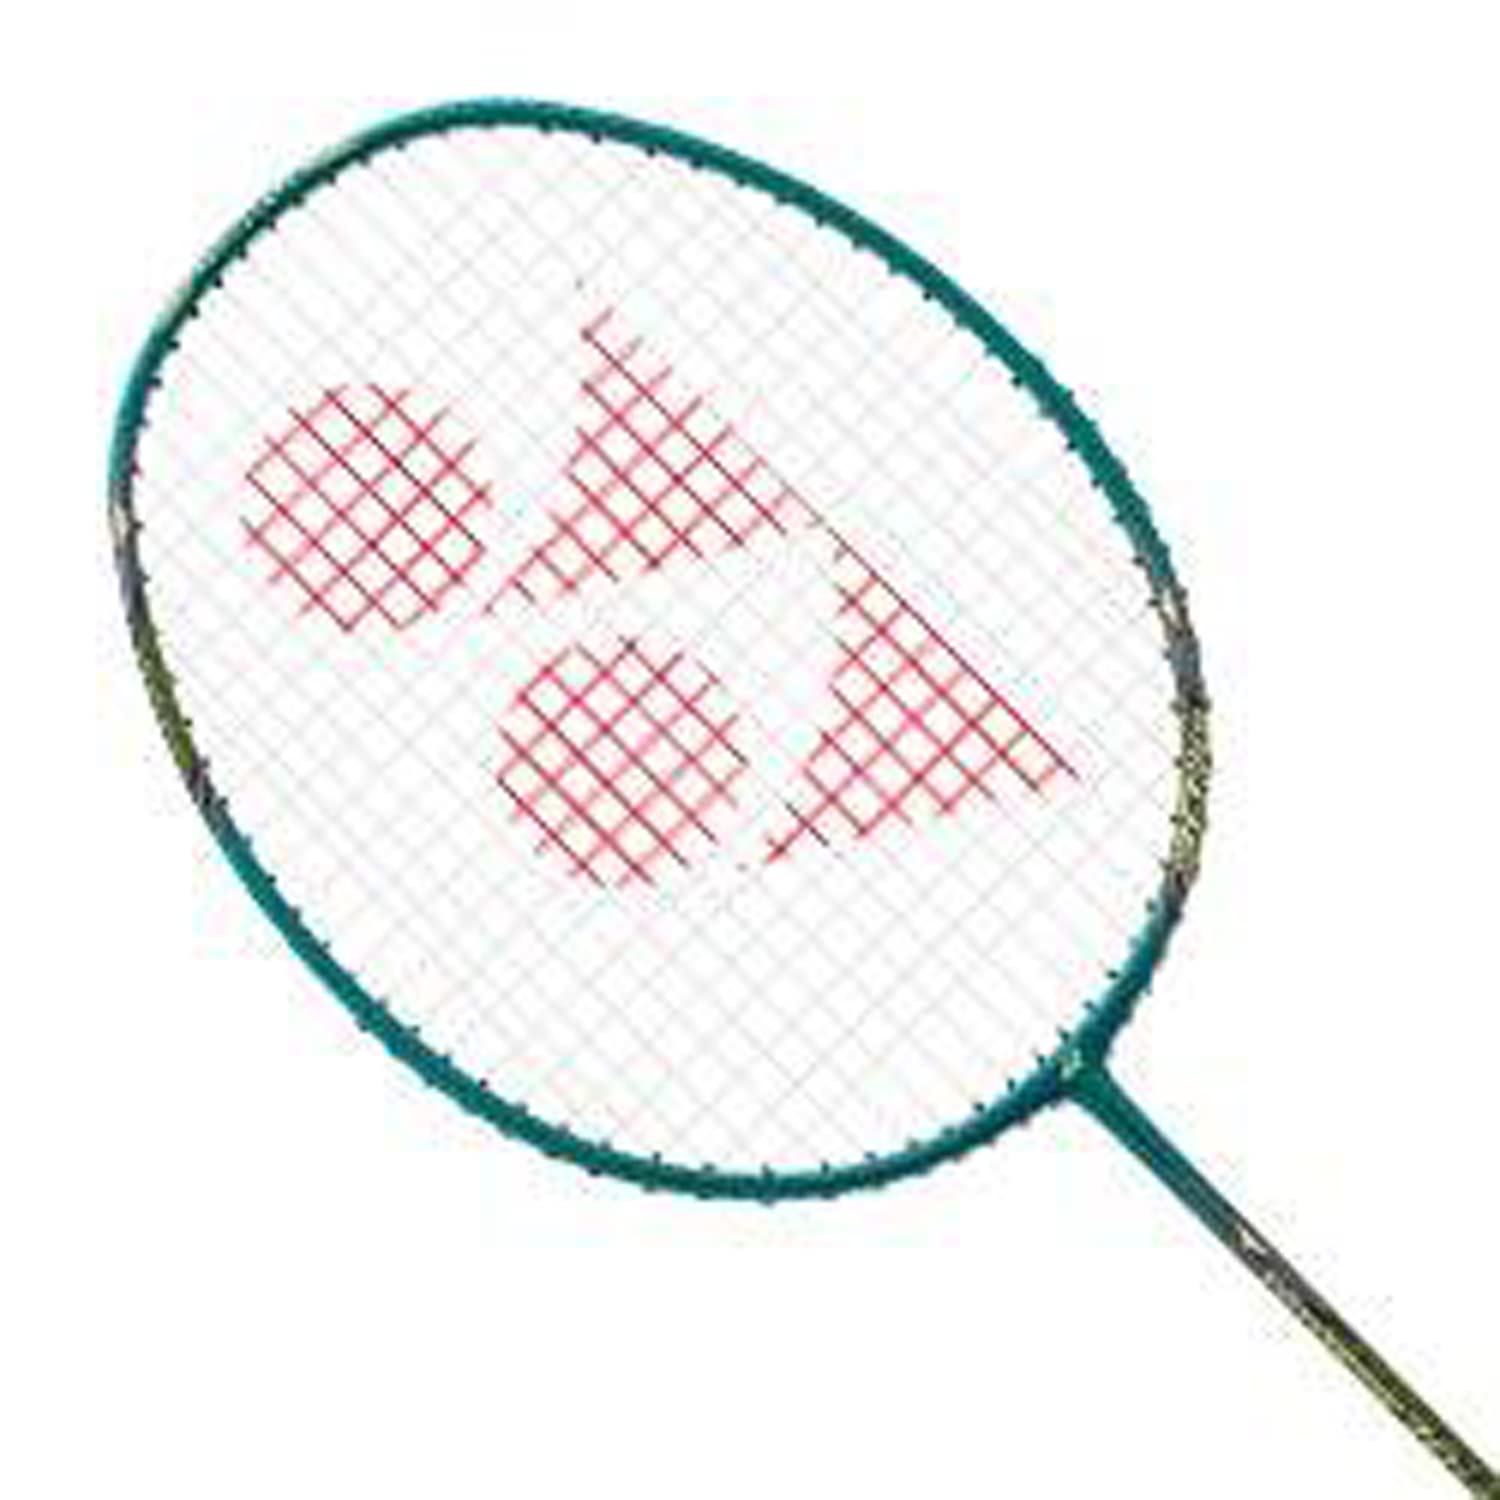 Yonex NanoRay 70 Light Graphite Strung Badminton Racquet, G4 - Green - Best Price online Prokicksports.com